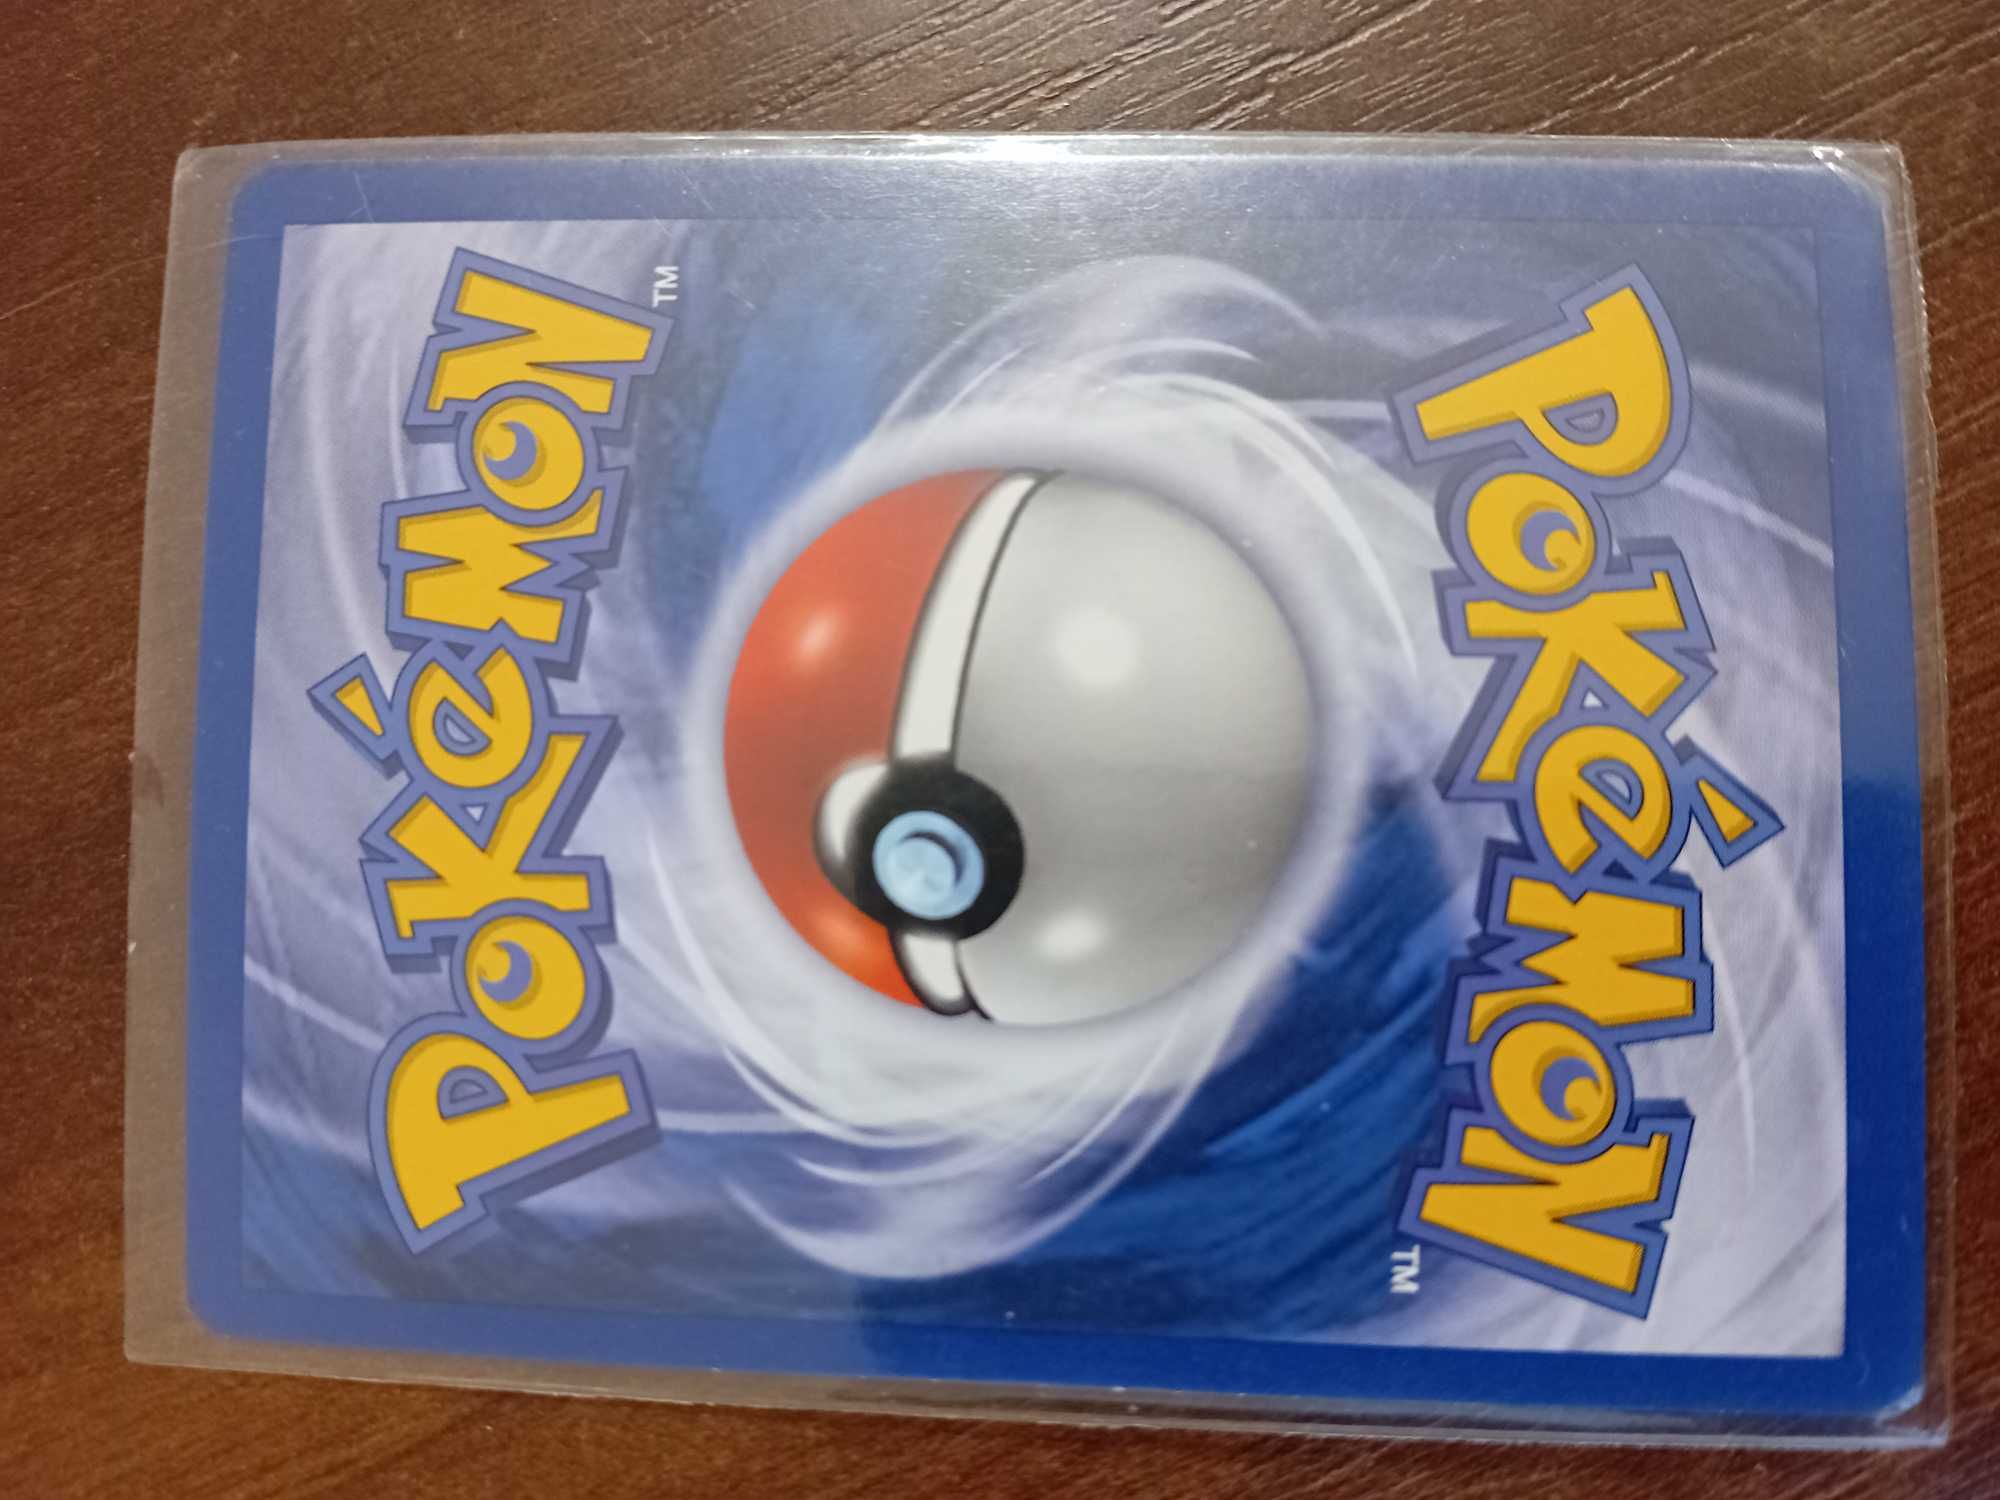 Pokémon Sichlor unikat! Orginał 1999rok. 1 Edycja